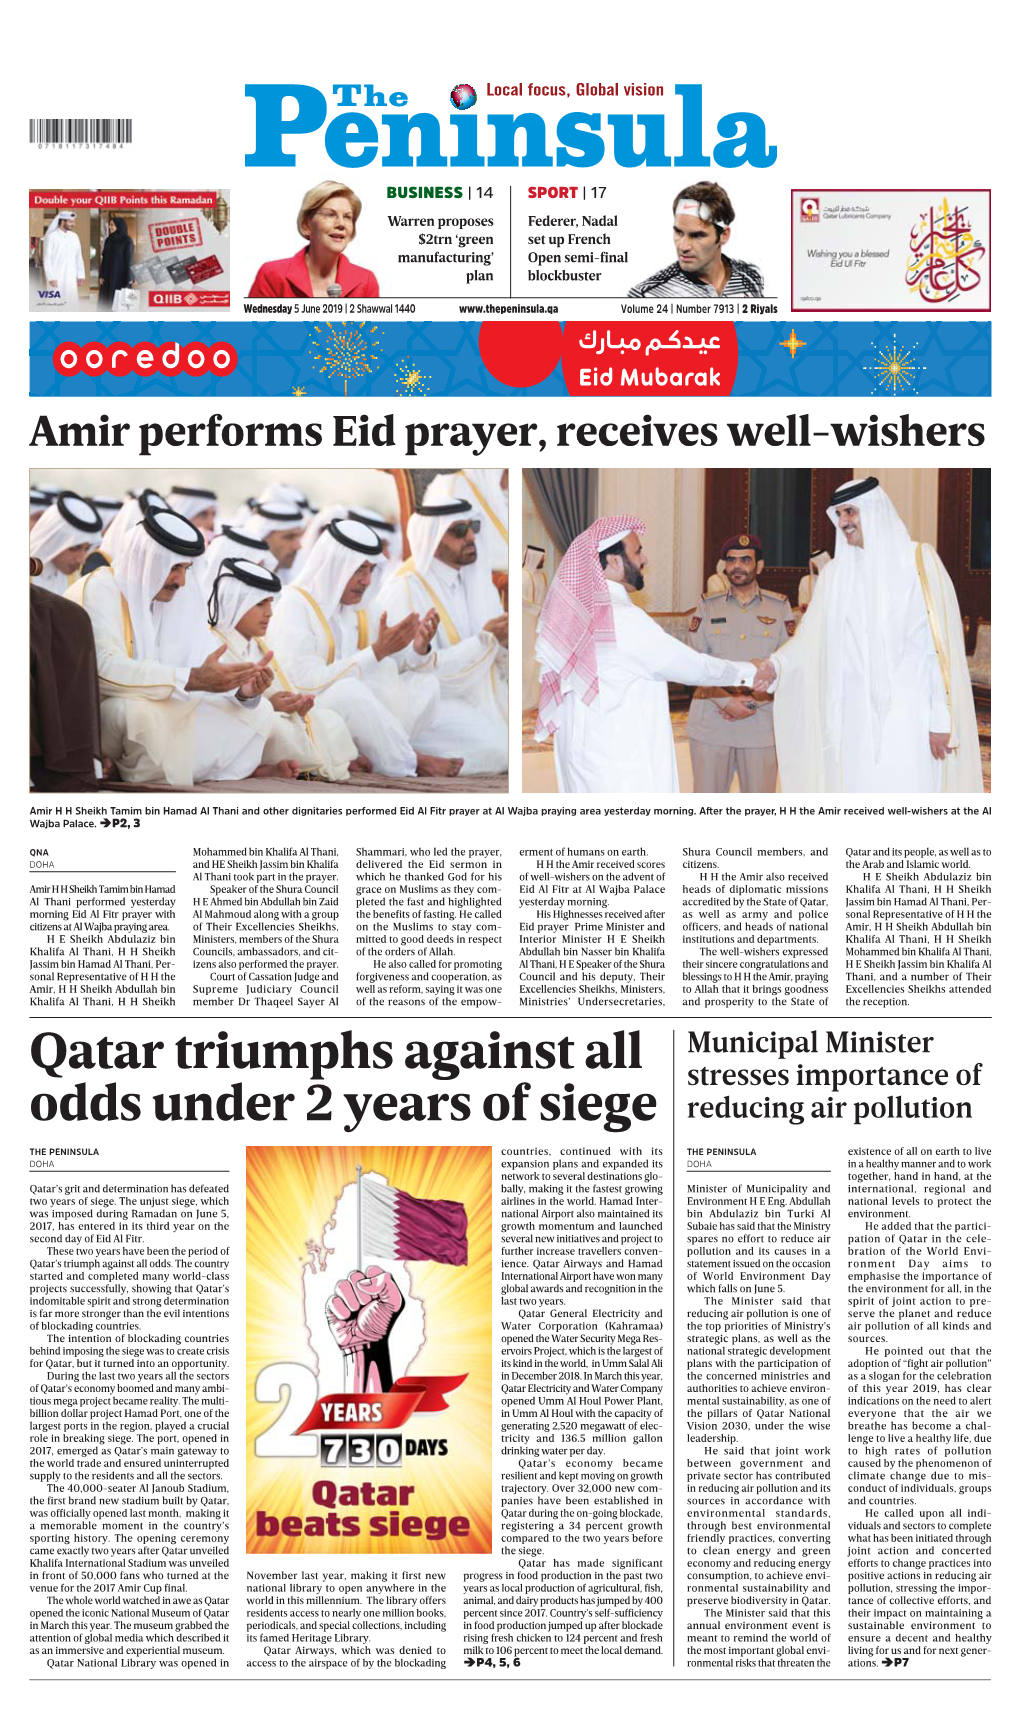 Qatar Triumphs Against All Odds Under 2 Years of Siege